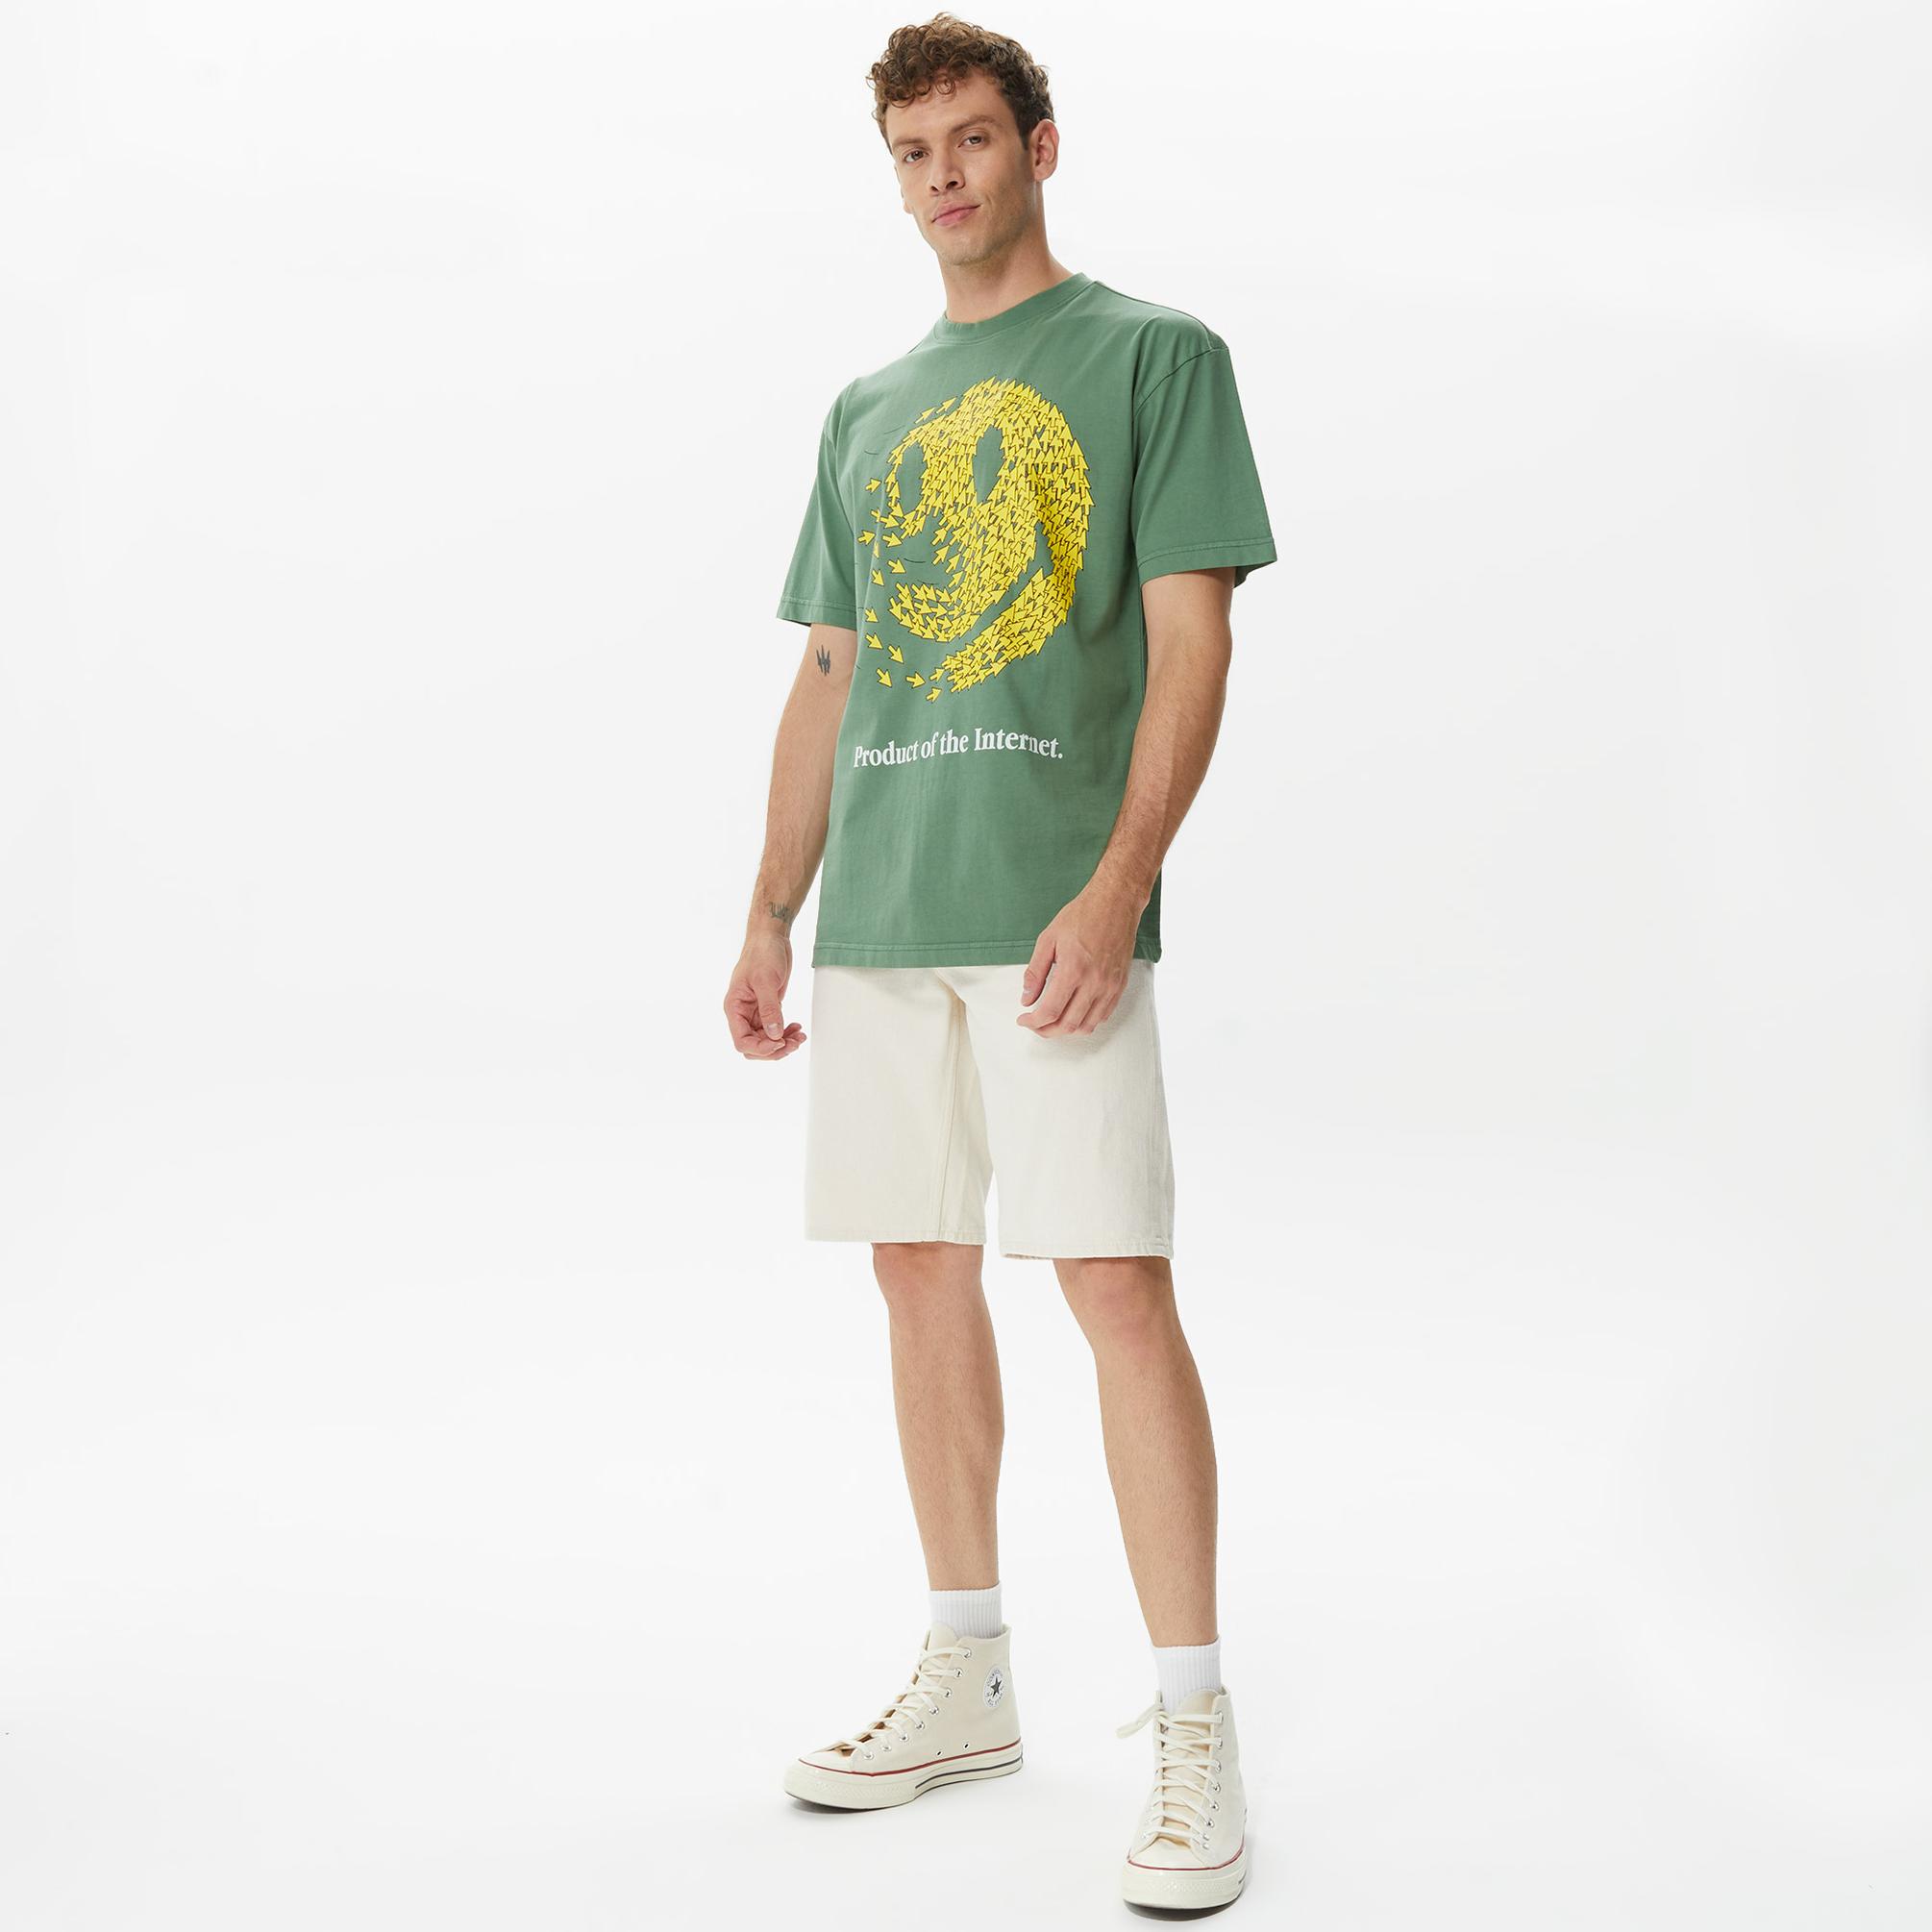  Market Smiley Product Of The Internet Erkek Yeşil T-Shirt